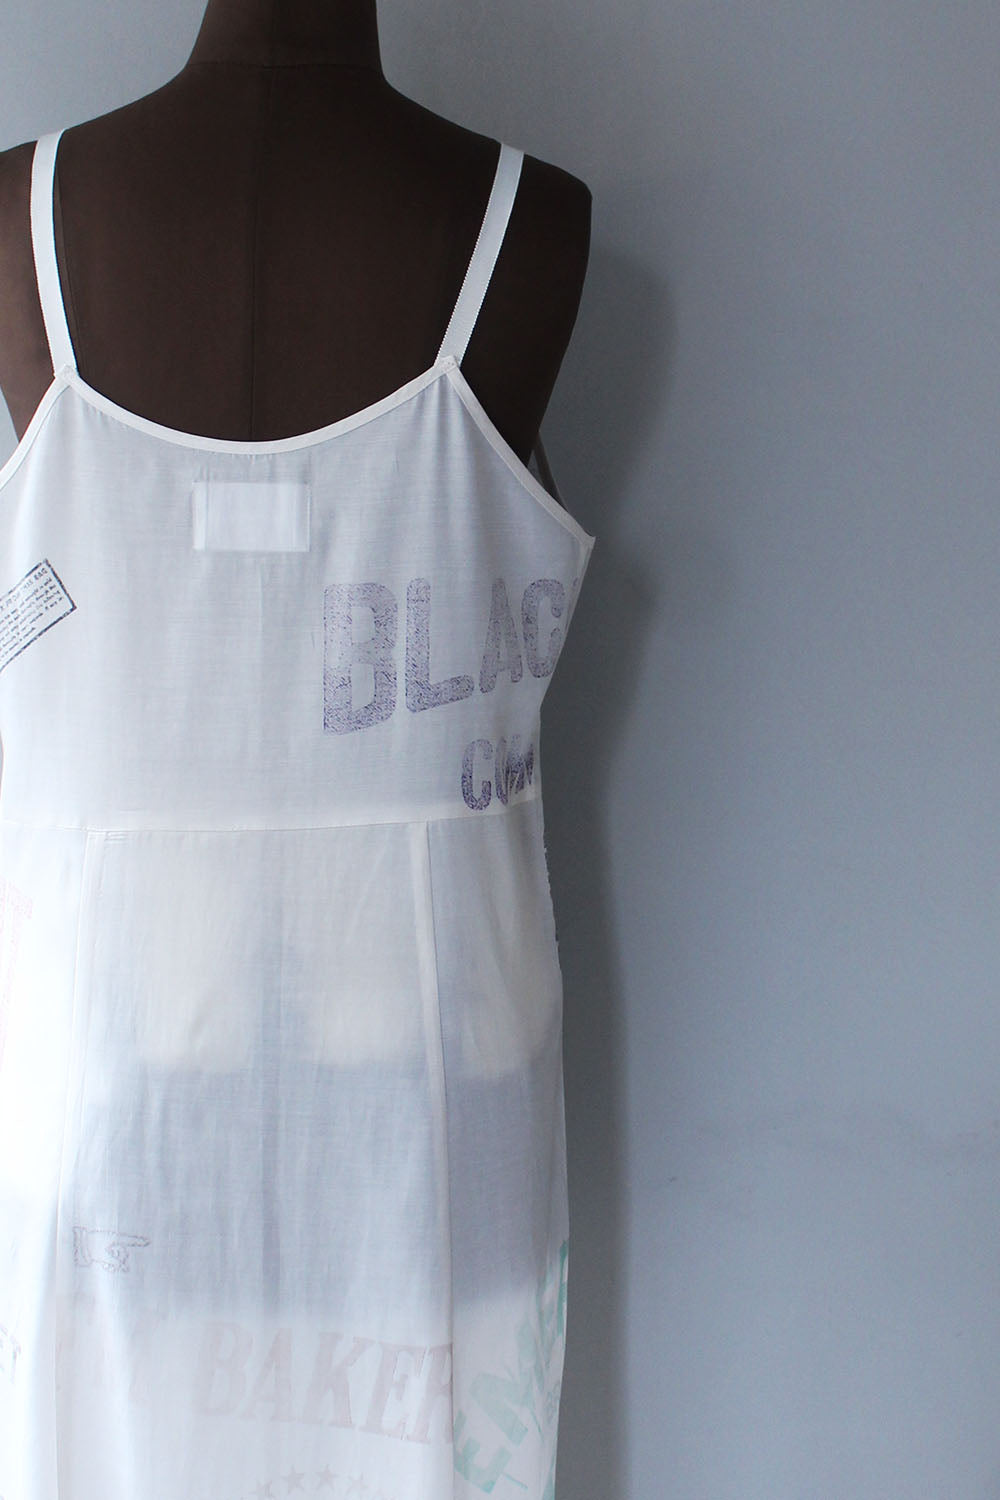 FILL THE BILL “ FLOUR BAG PRINT DRESS (white)”